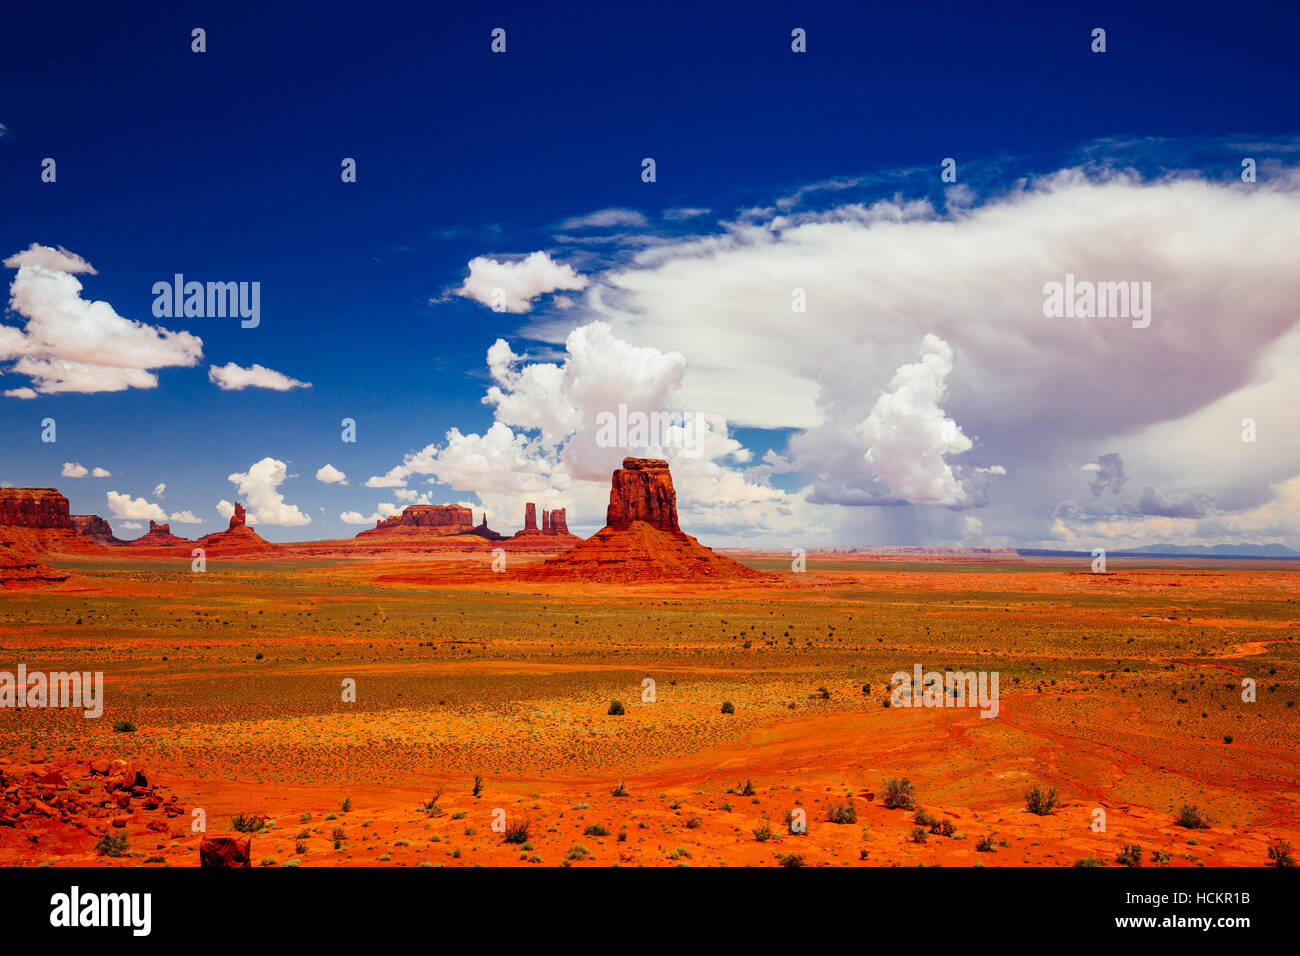 Monument Valley Navajo Tribal Park, Arizona, EE.UU. Foto de stock